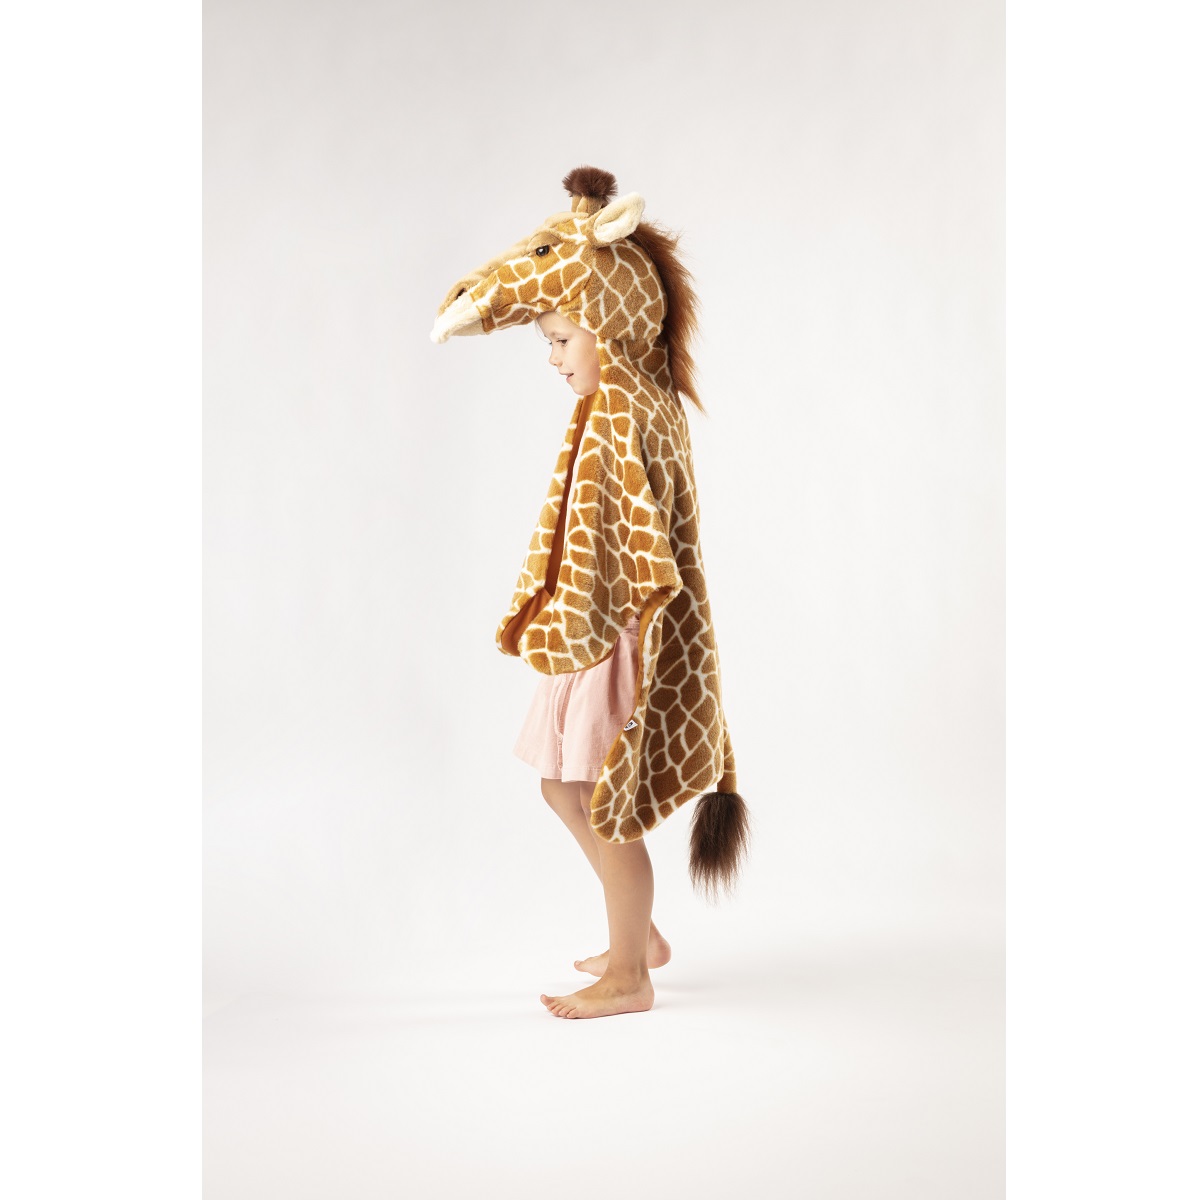 Disguise, Giraffe PRE-ORDER FOR LATE JUNE